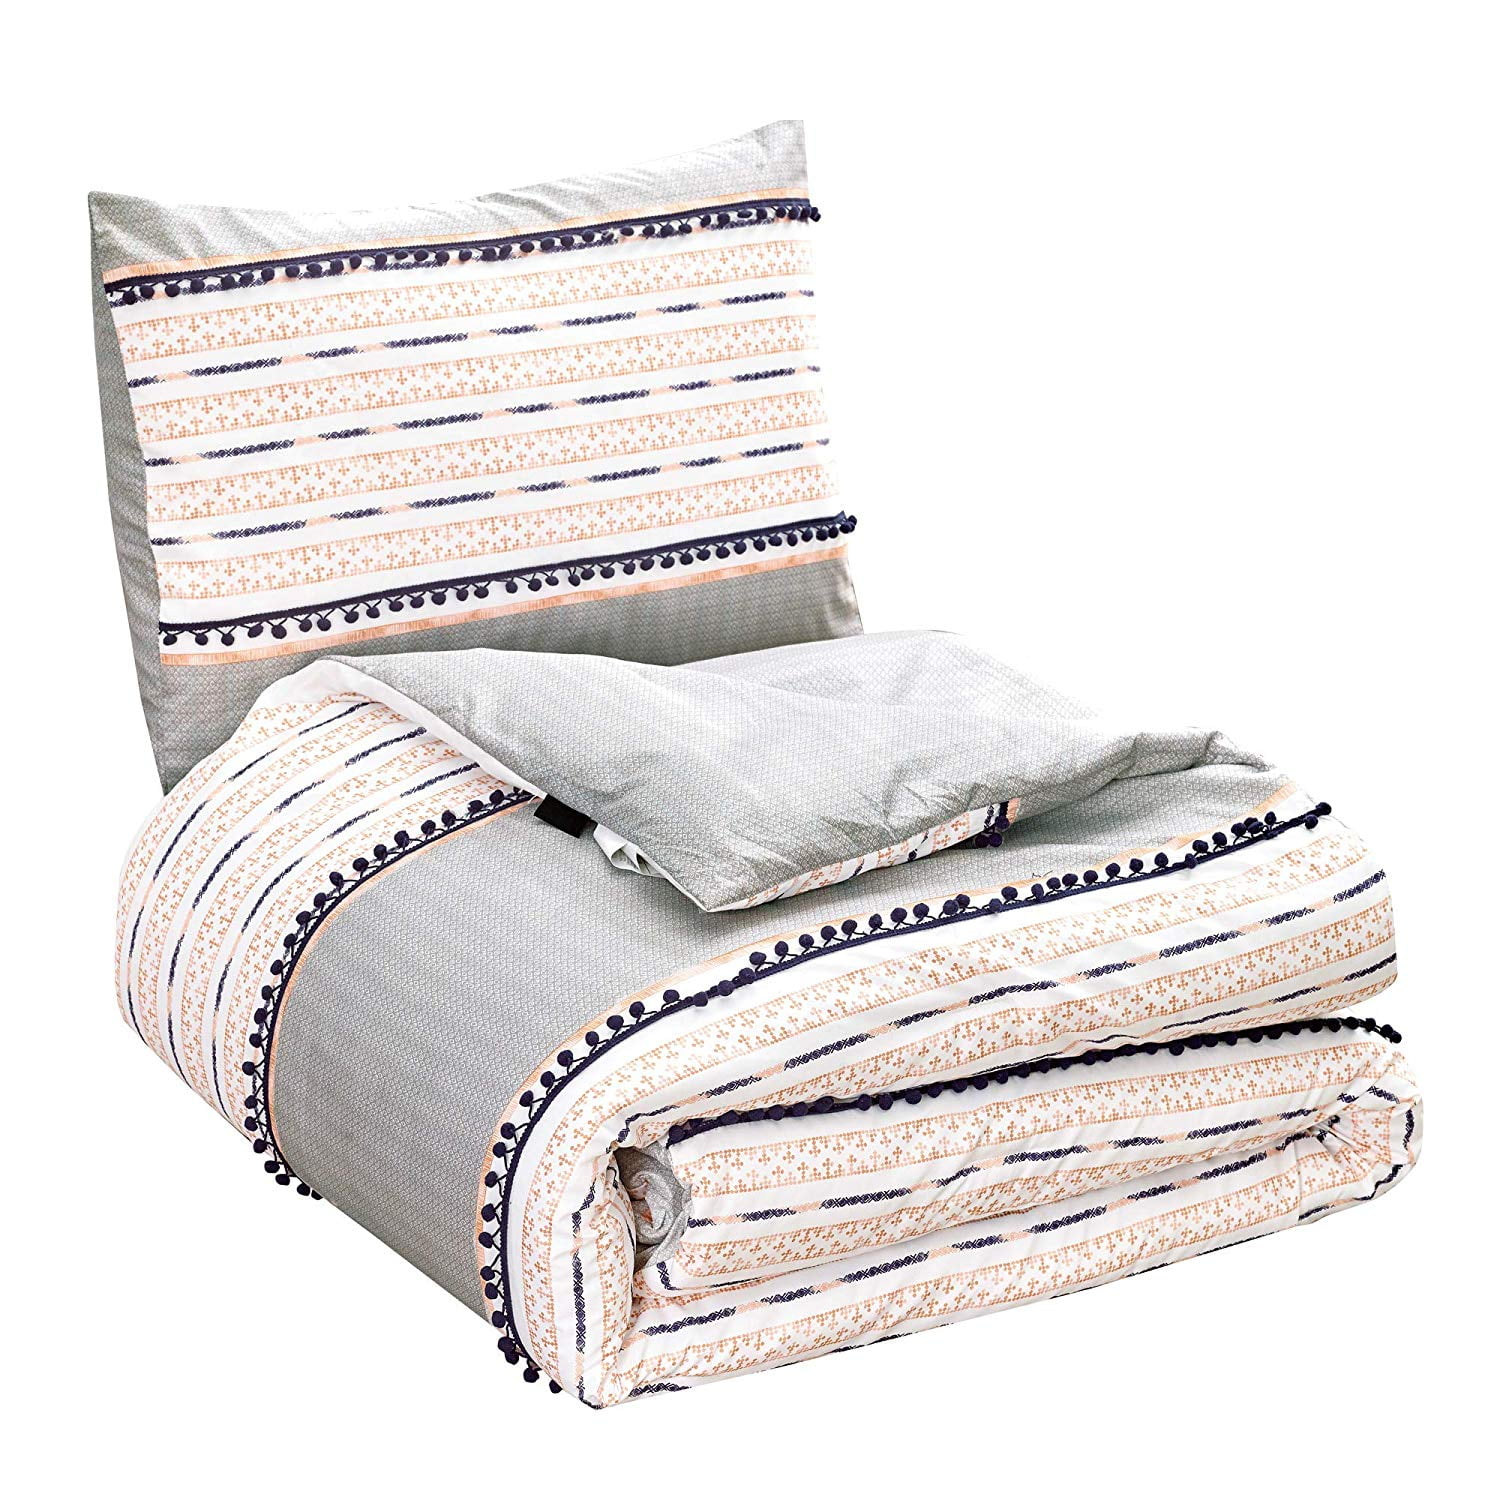 2 Piece Beige Grey Comforter with Poms Fringe Goose Down Alternative Set Twin Size Bedding Includes Pillow Sham case Bedroom Dorm Room- Frencesca (Twin) - Walmart.com